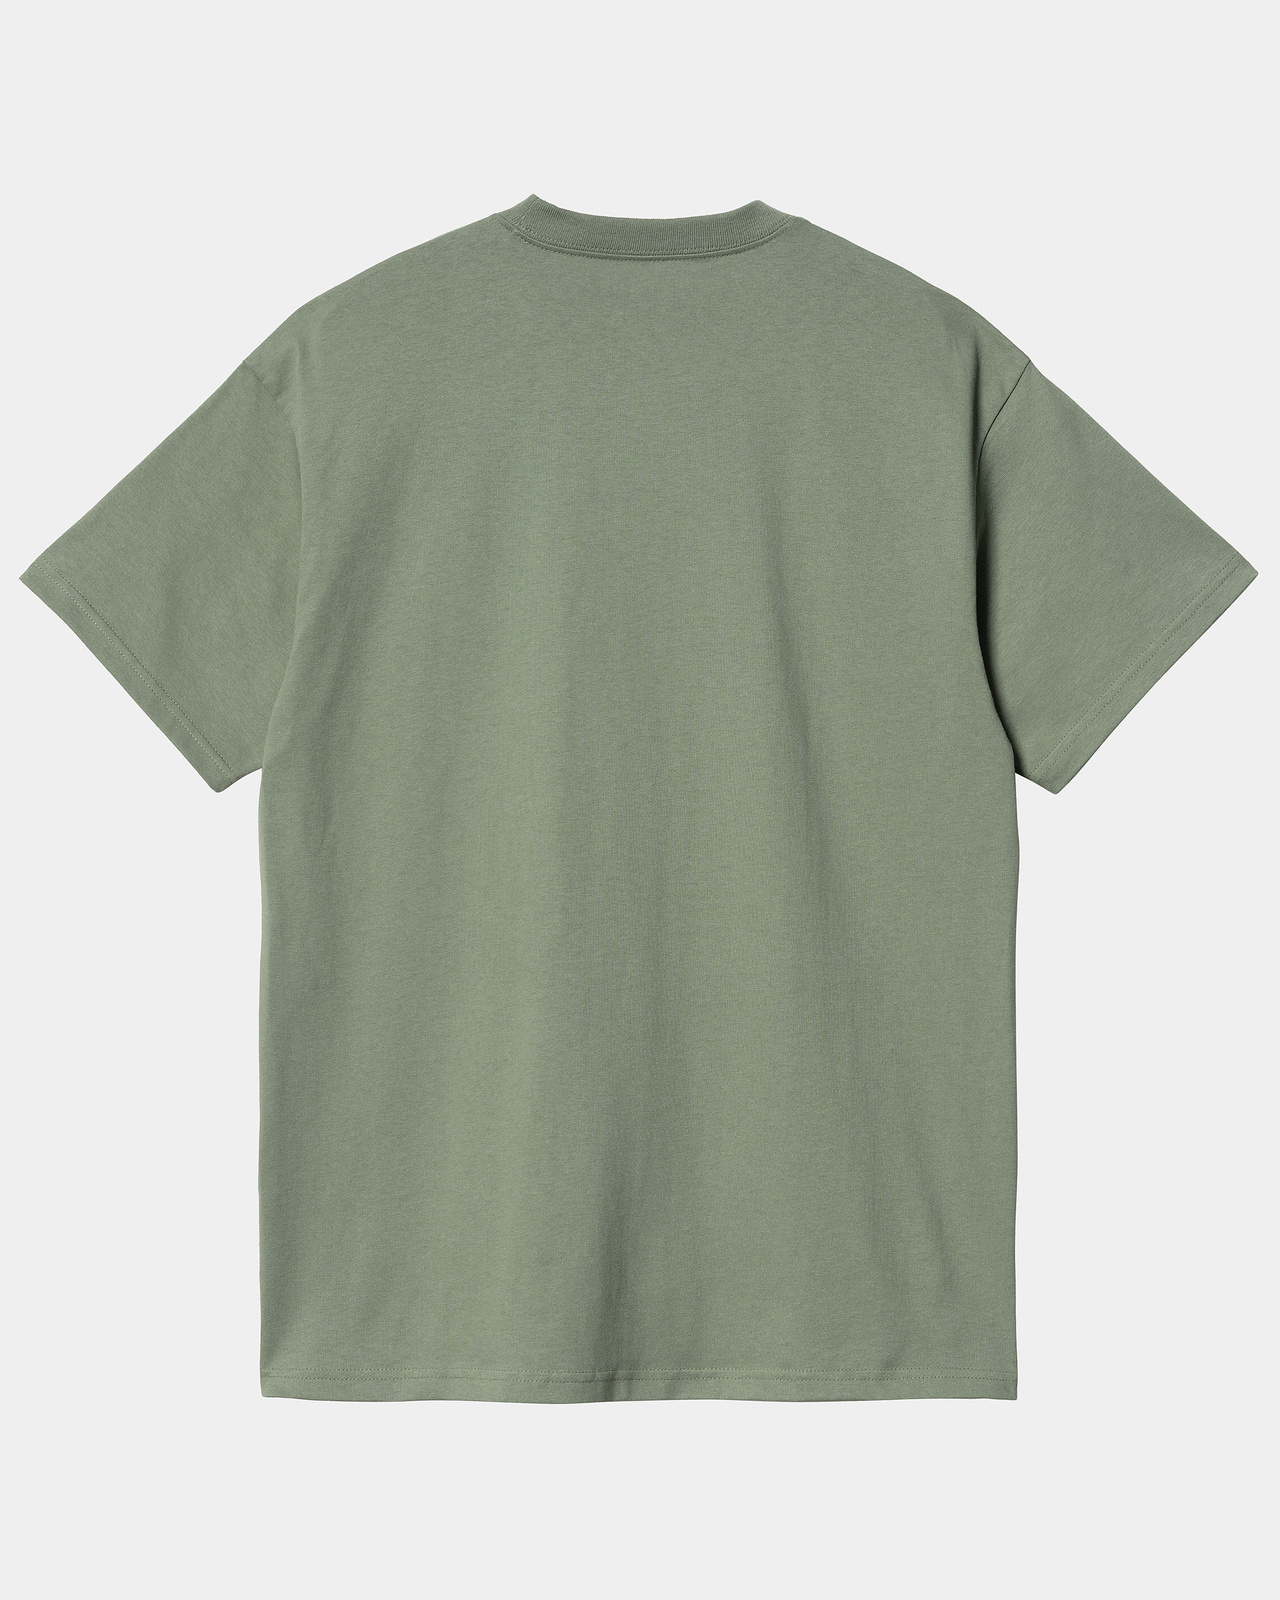 T-shirt Field Pocket - Park - M